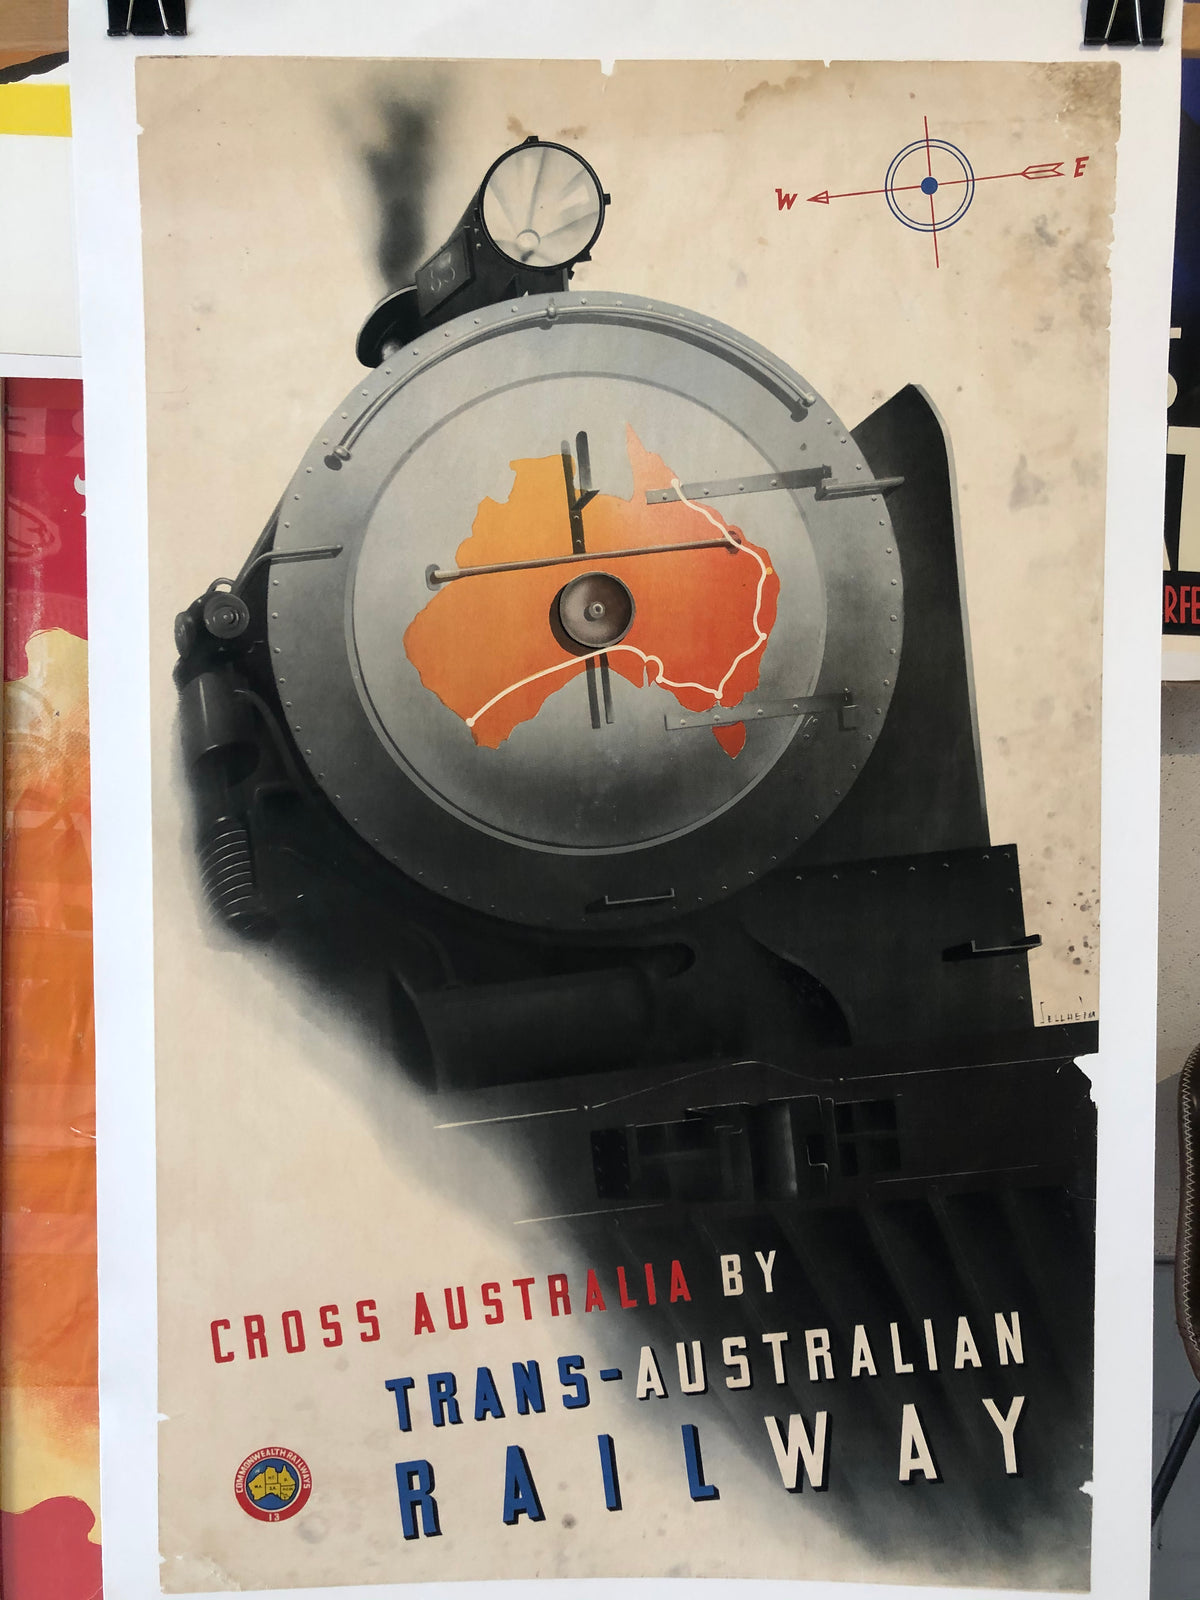 "Cross Australia by Trans-Australian Railway" Advertisement by Gert Sellheim